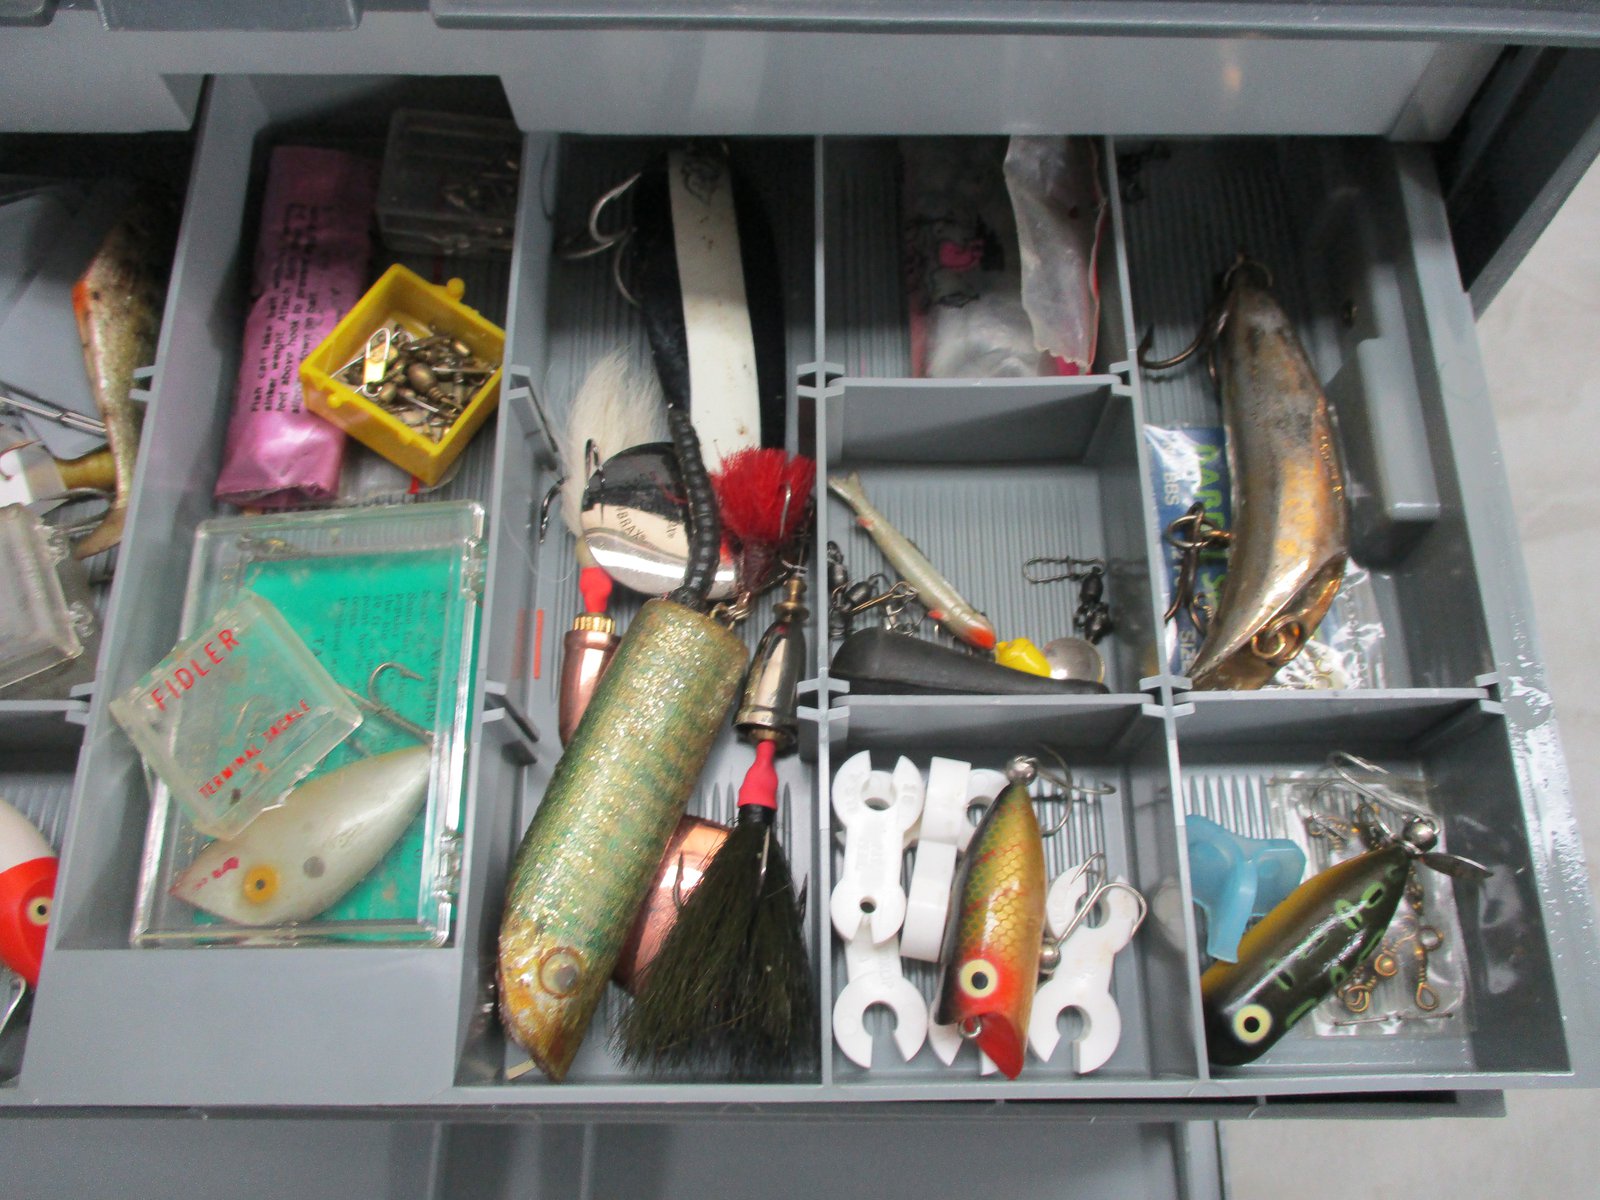 Fishing Tackle Box Tacklebox For Fishing Fishing Accessories Storage Fish  Lure Box Large Tackle Box Organizer For Freshwater